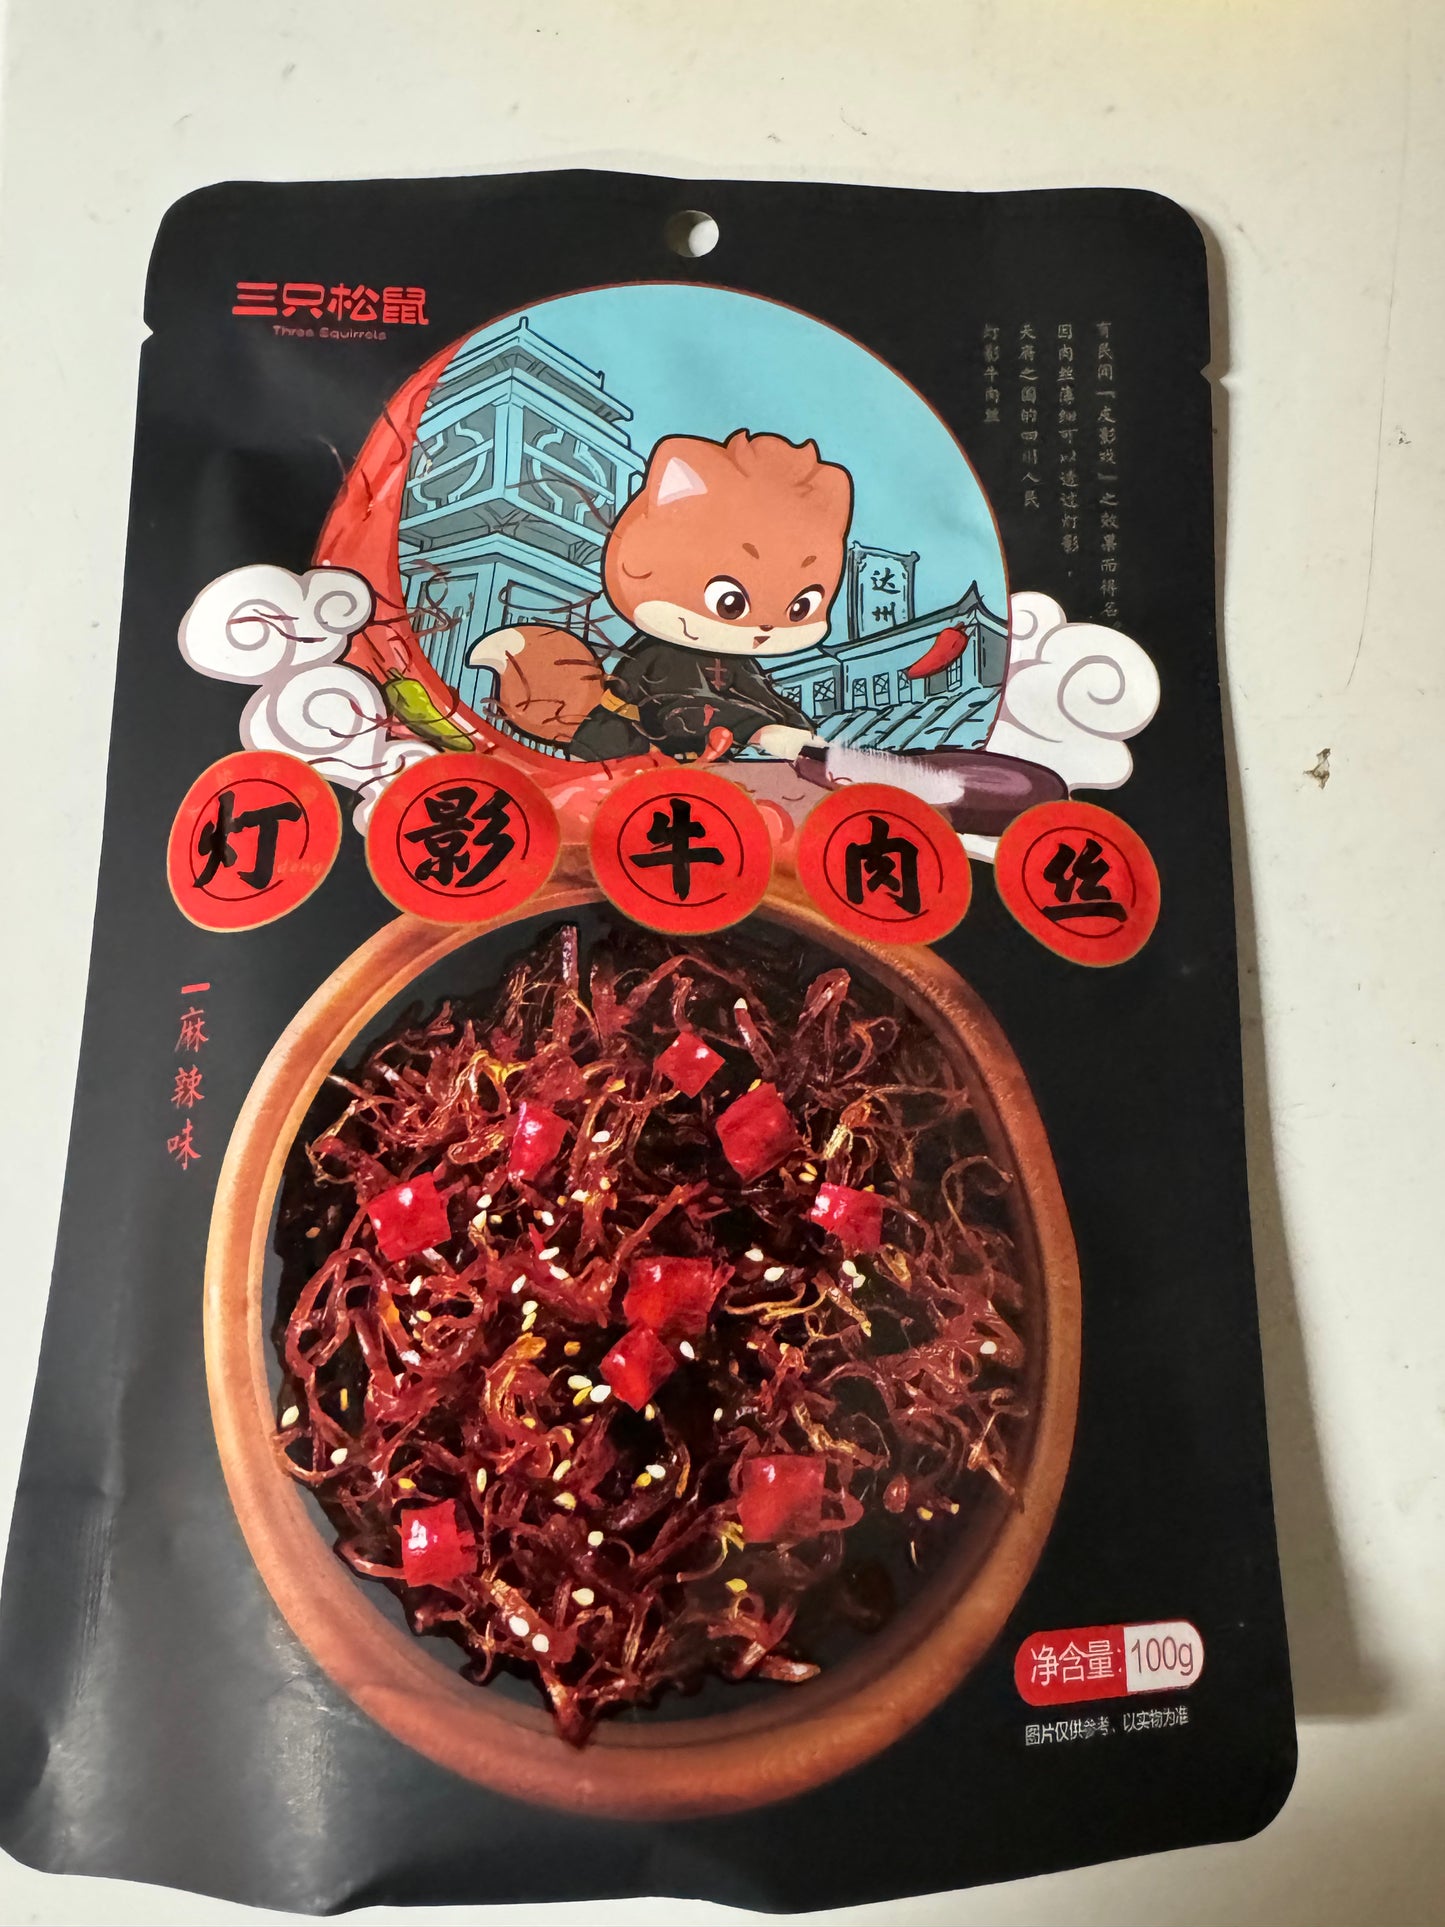 1～Dengying shredded beef (three squirrels, spicy flavor), 100g/bag,